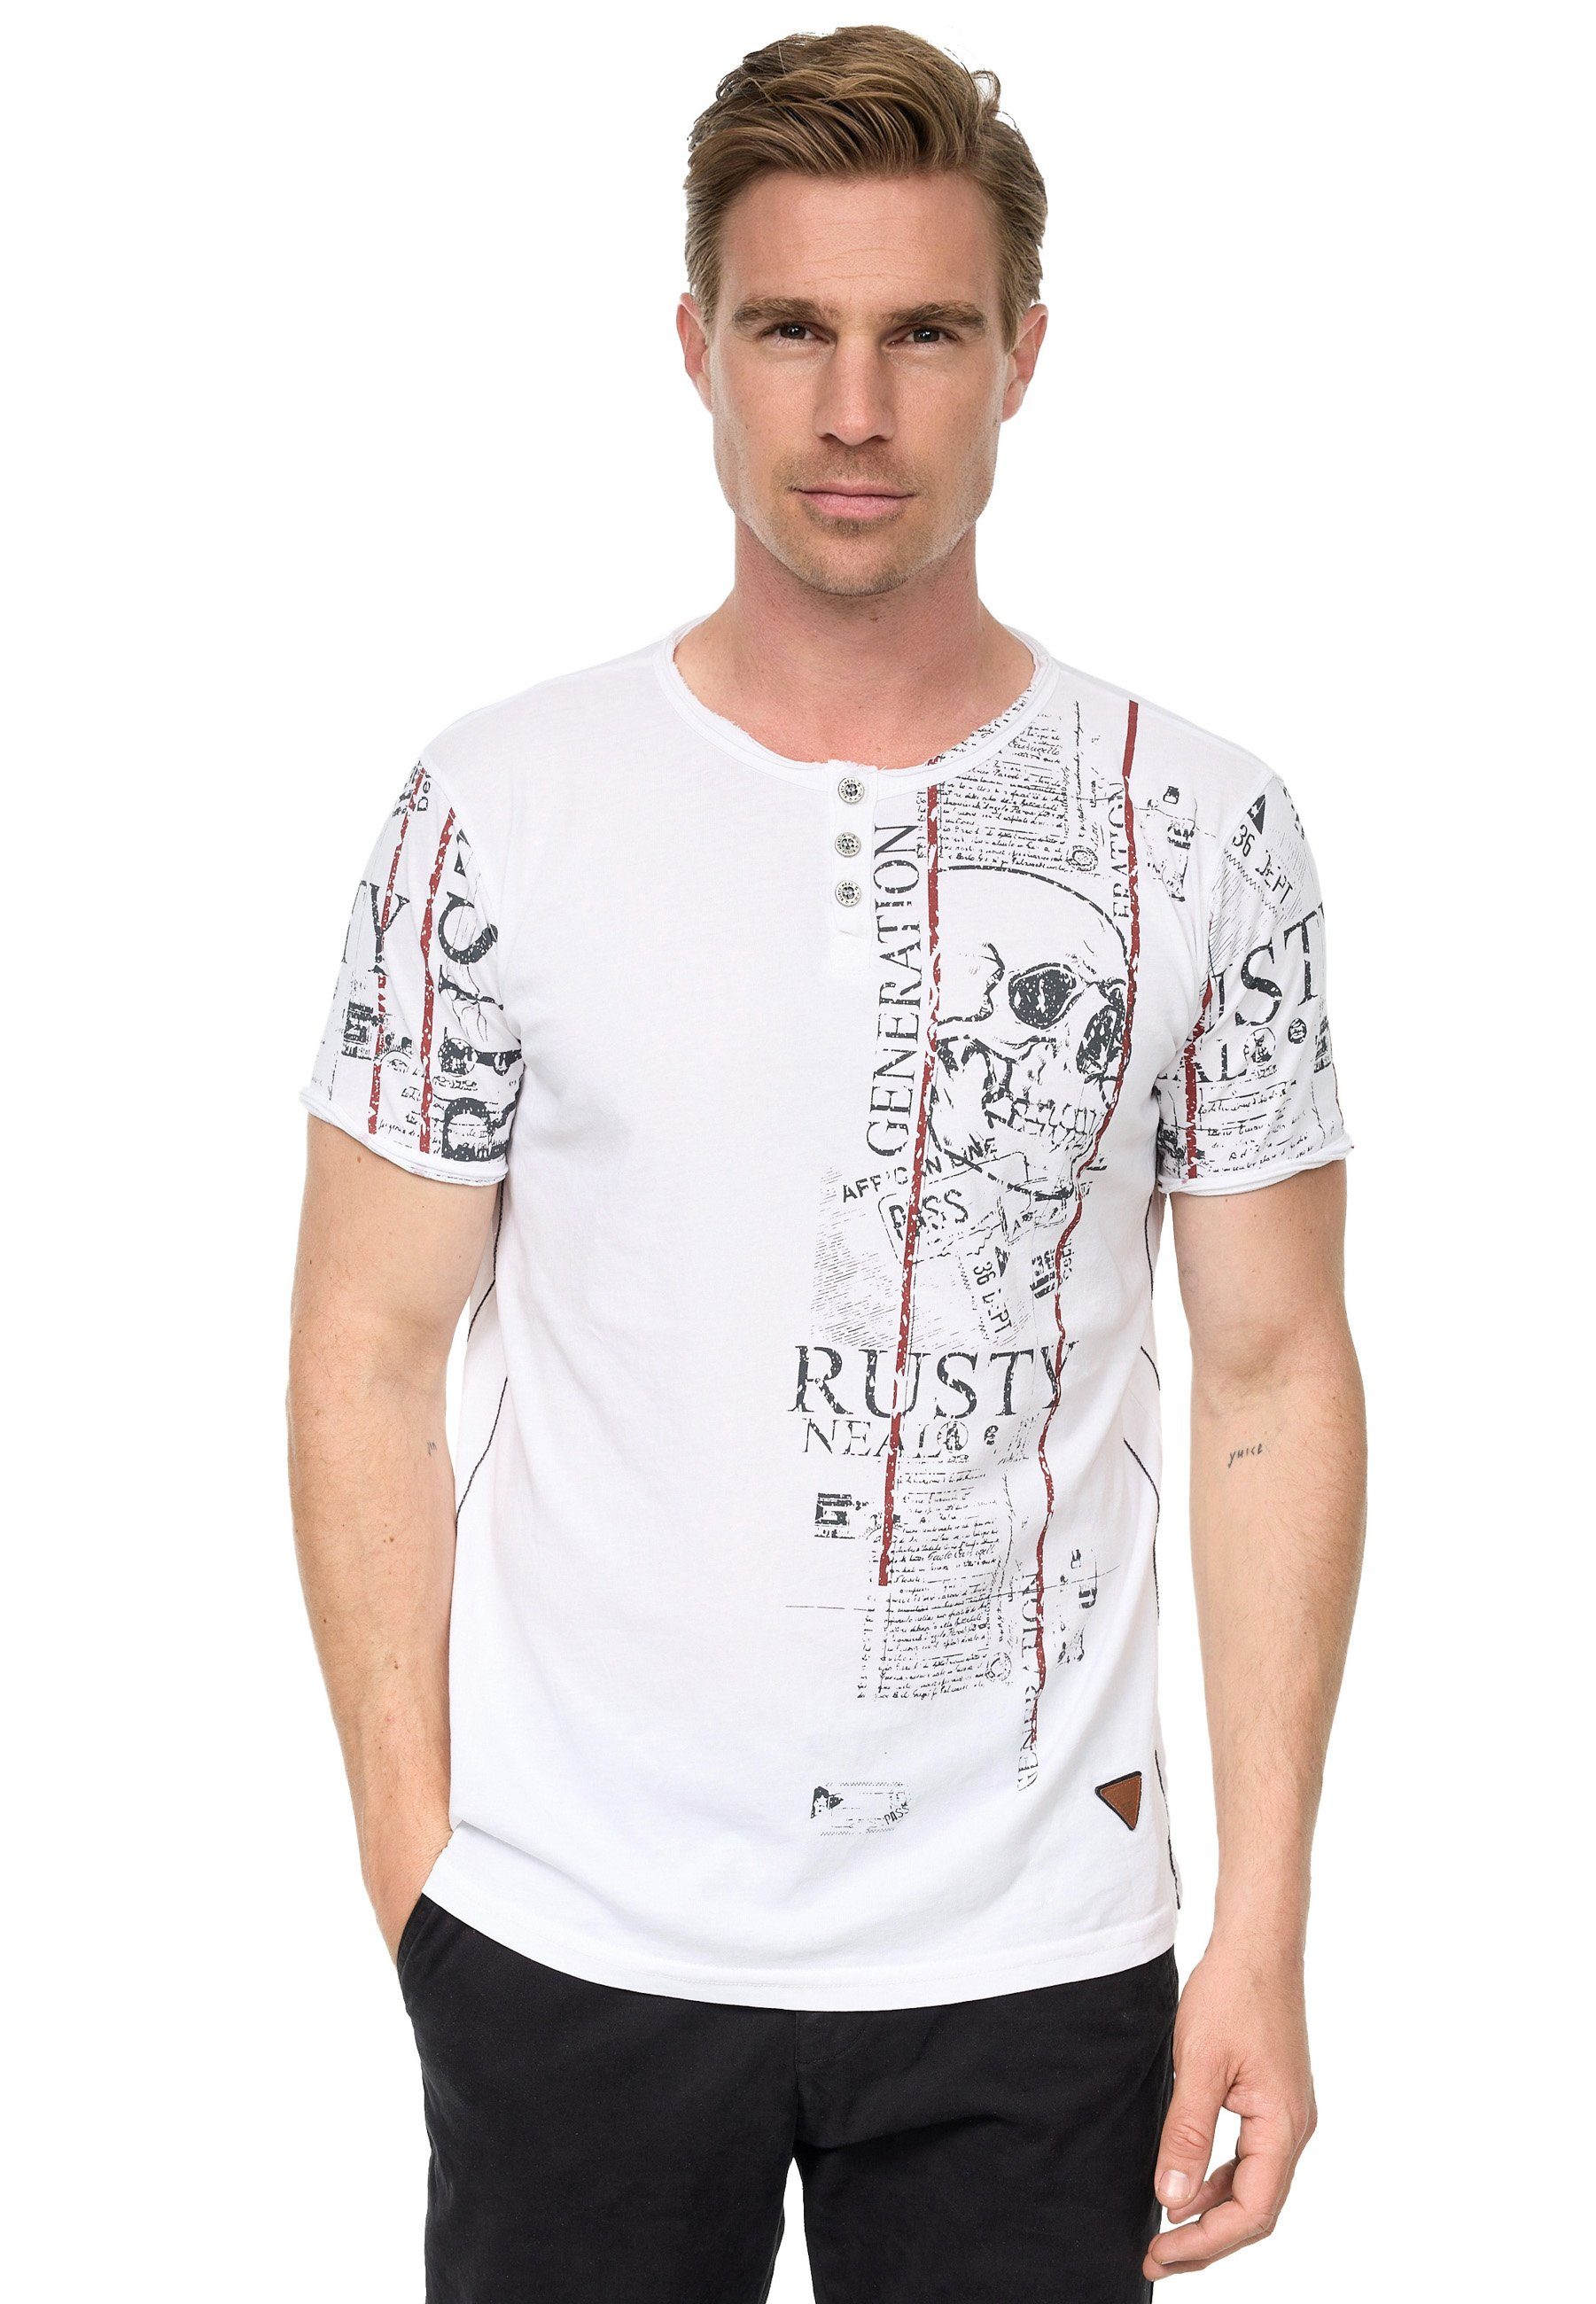 Allover-Print im Rusty mit T-Shirt Neal weiß Used-Look